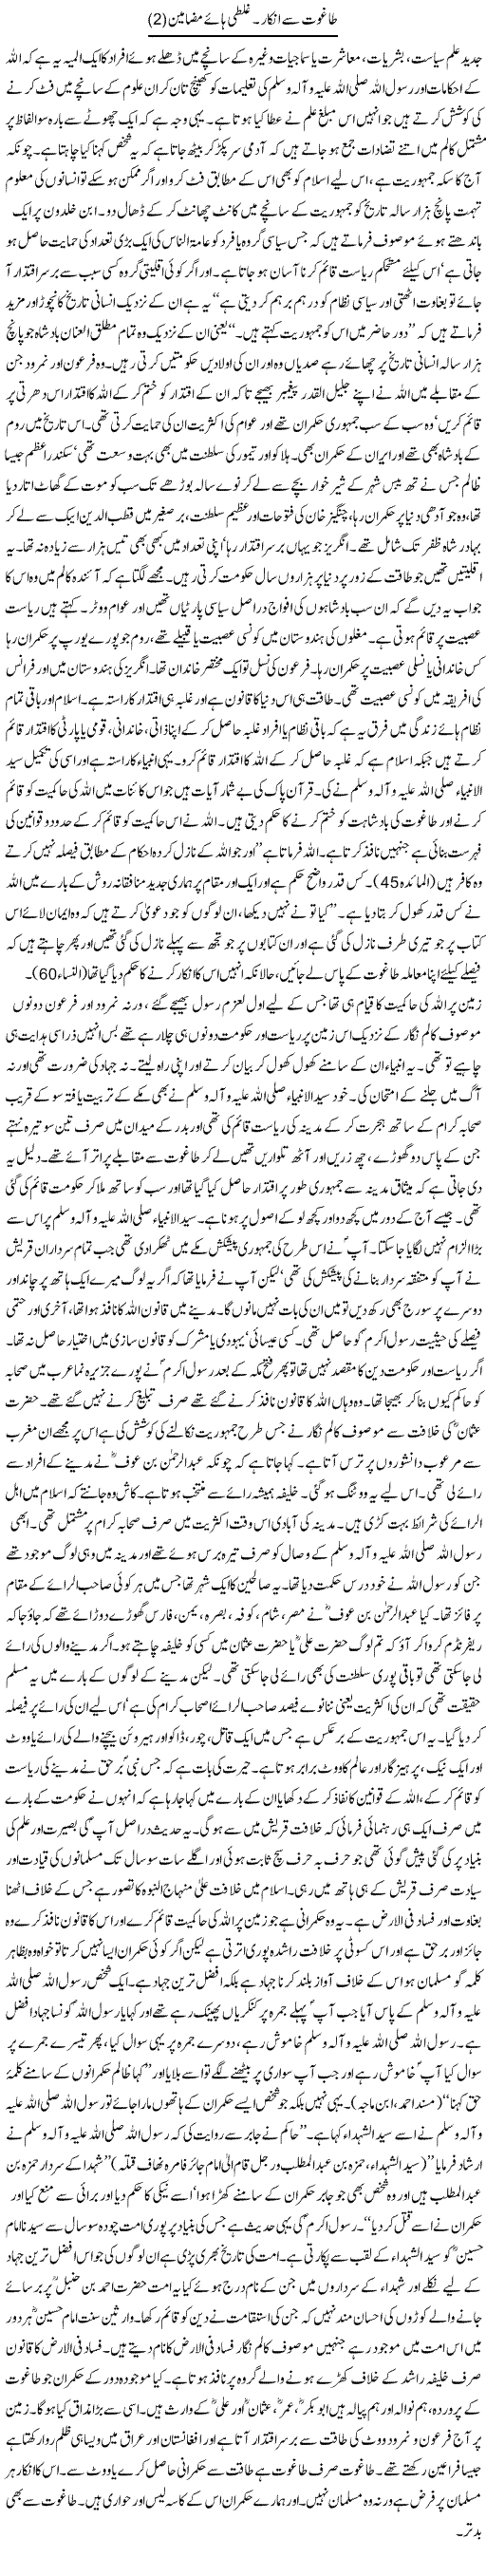 Taghoot se inkar. ghalti haae mazameen (2) | Orya Maqbool Jan | Daily Urdu Columns